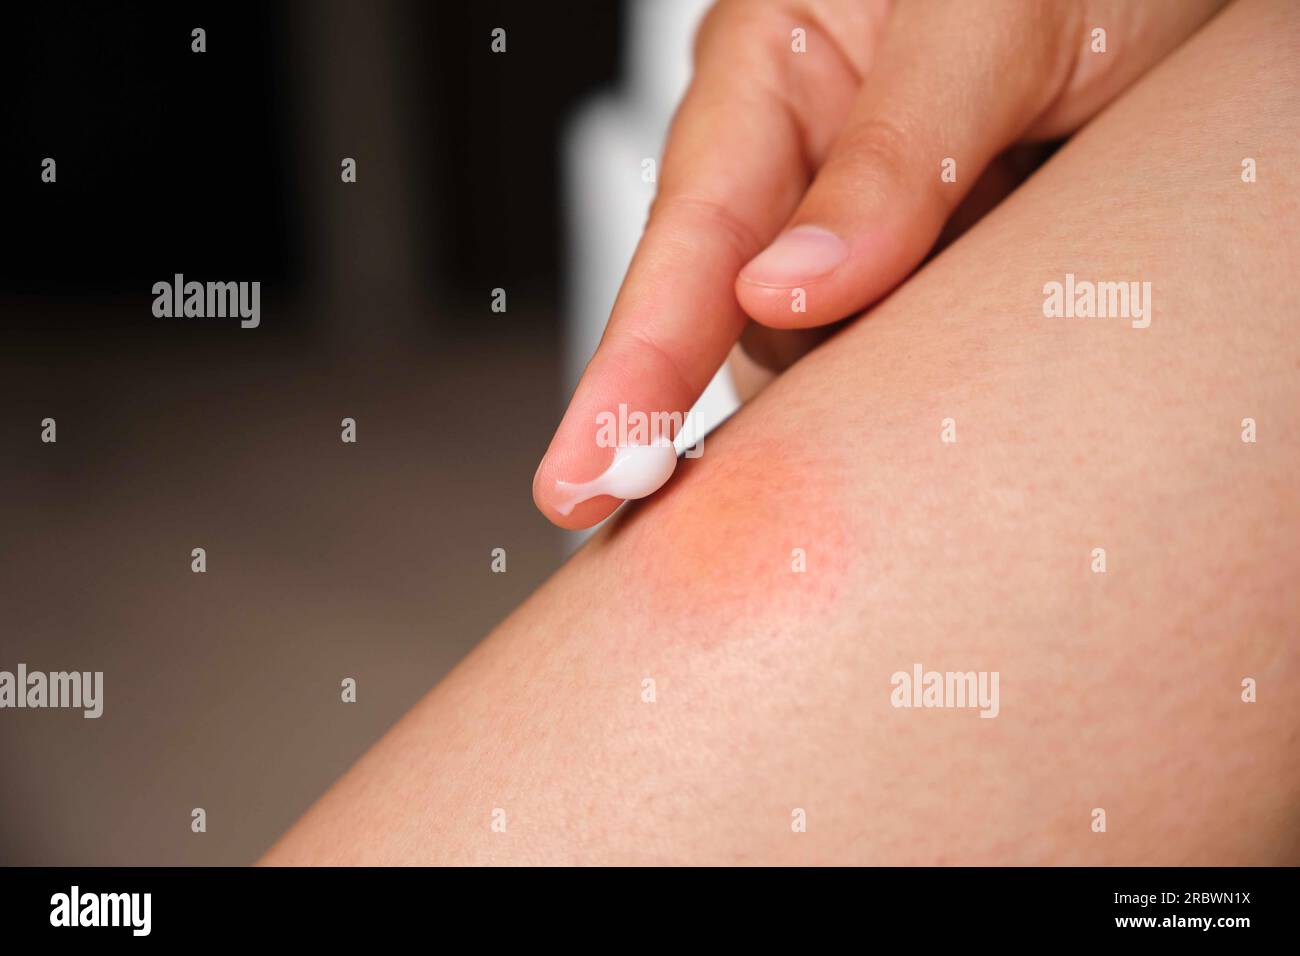 Woman applying medicine cream on mosquito bite on her leg. Stock Photo